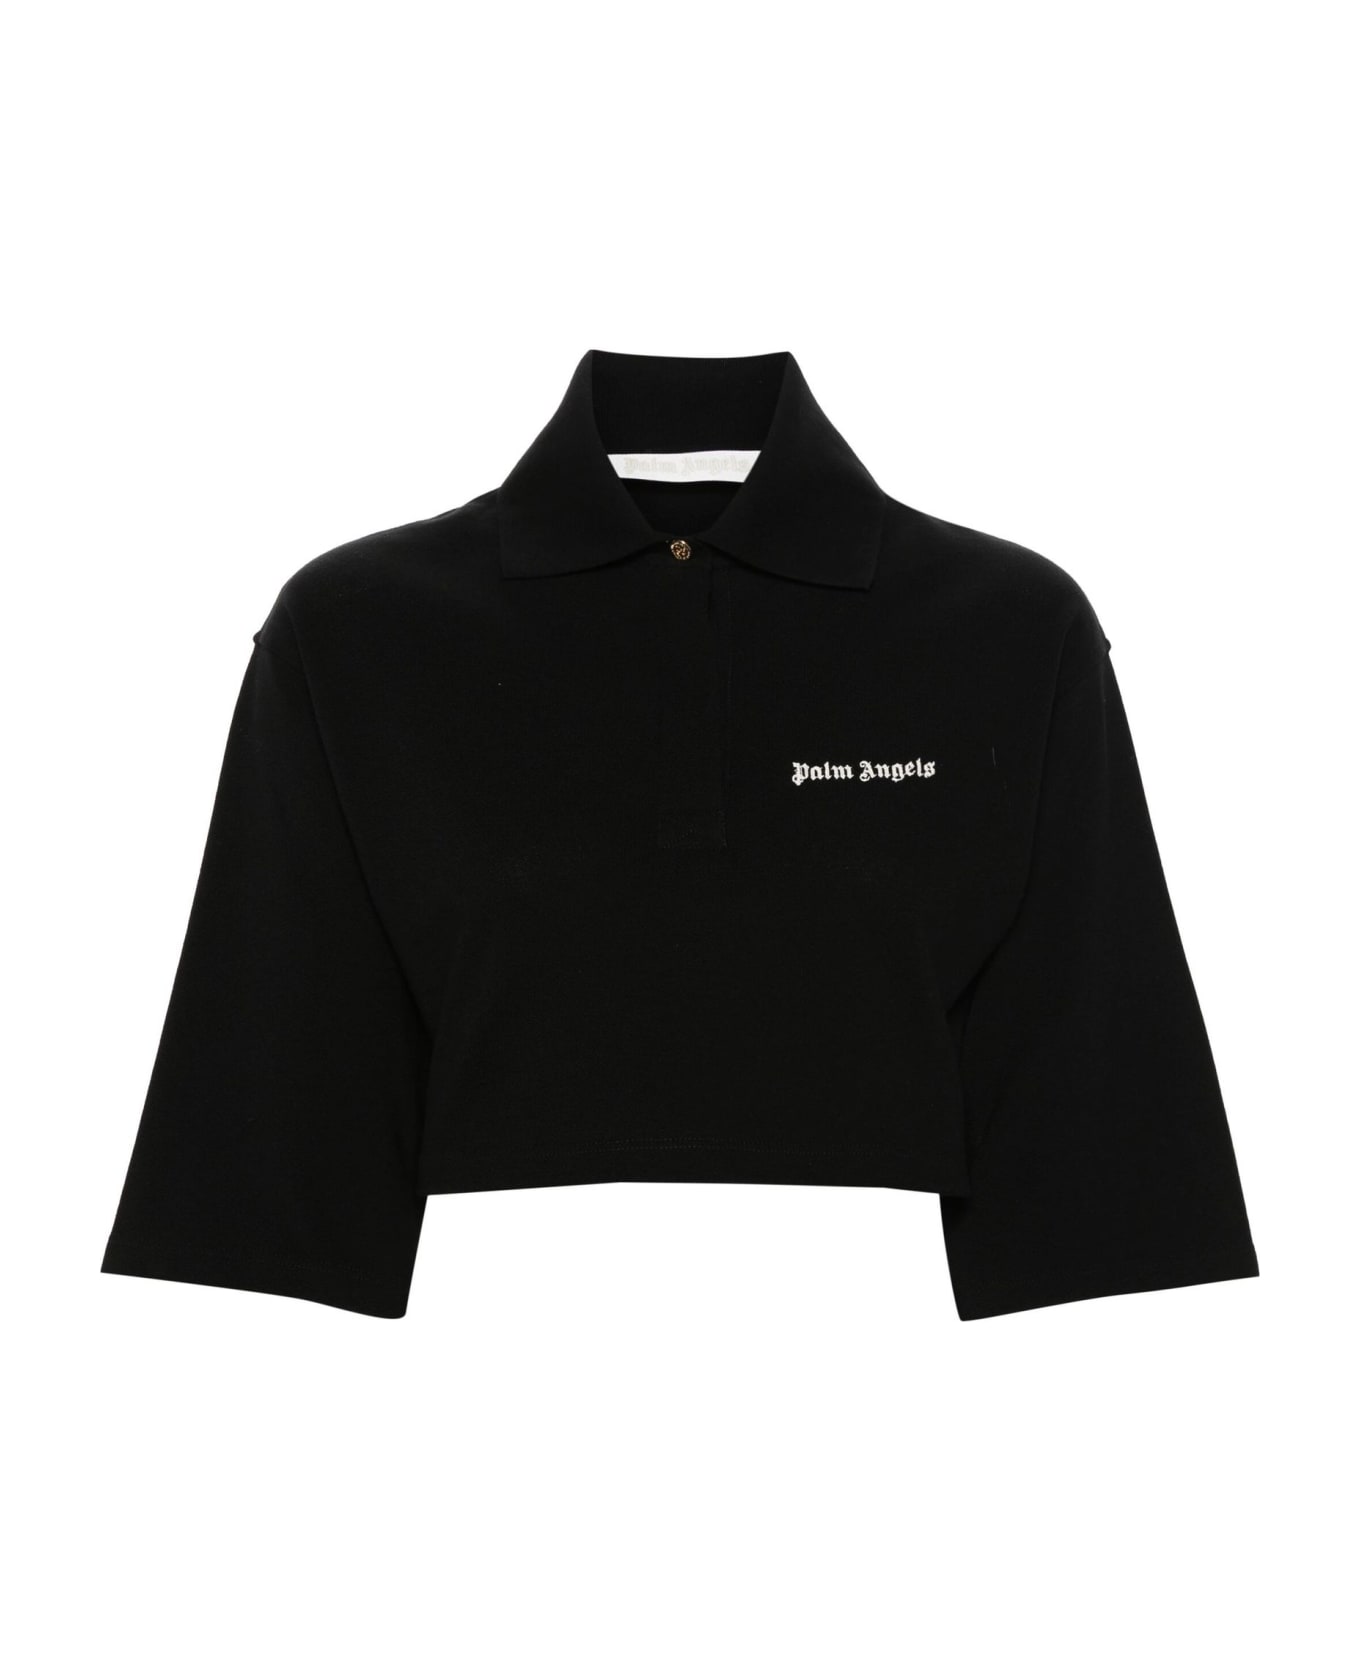 Palm Angels Black Cotton Polo Shirt - Black